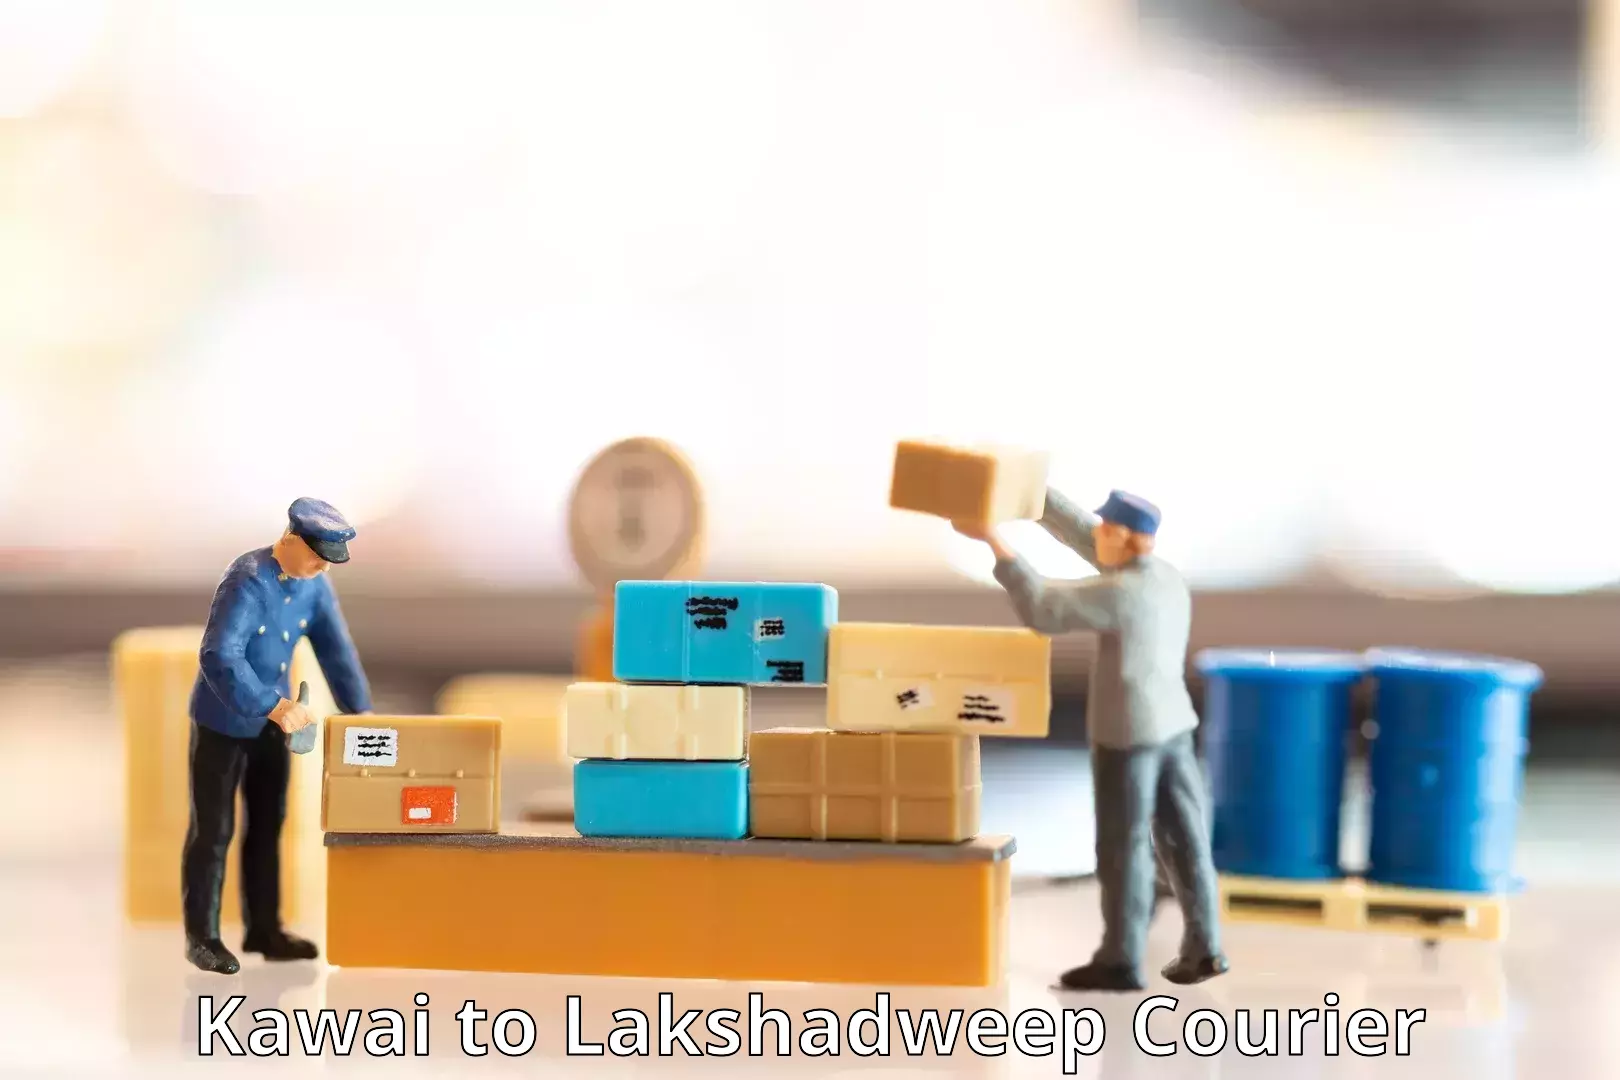 Nationwide courier service Kawai to Lakshadweep